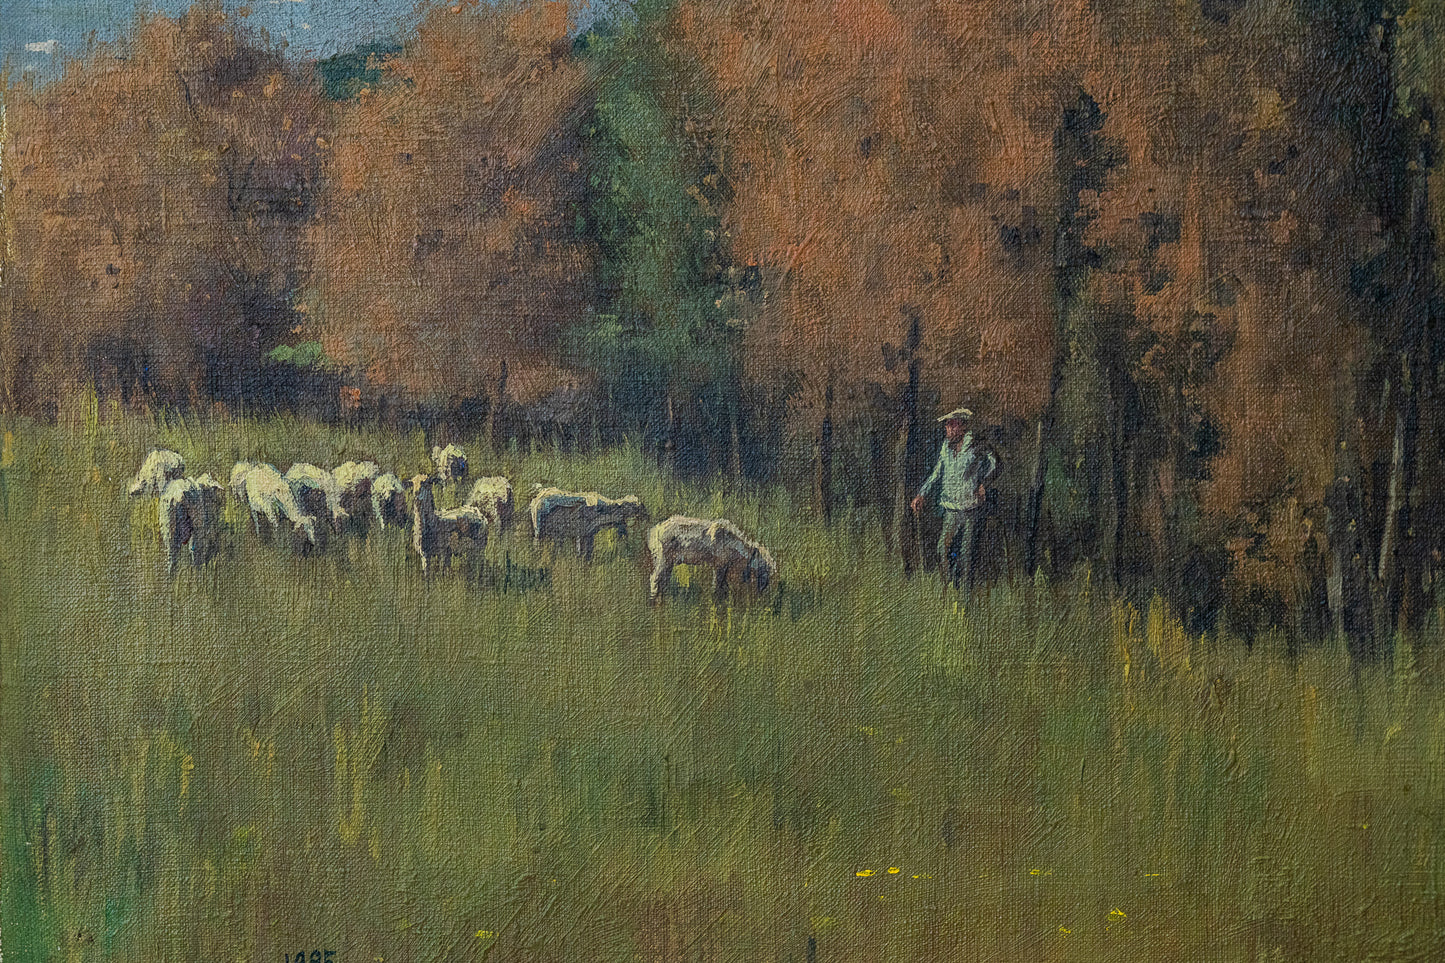 Benito SANCHEZ - The Shepherd and his Flock